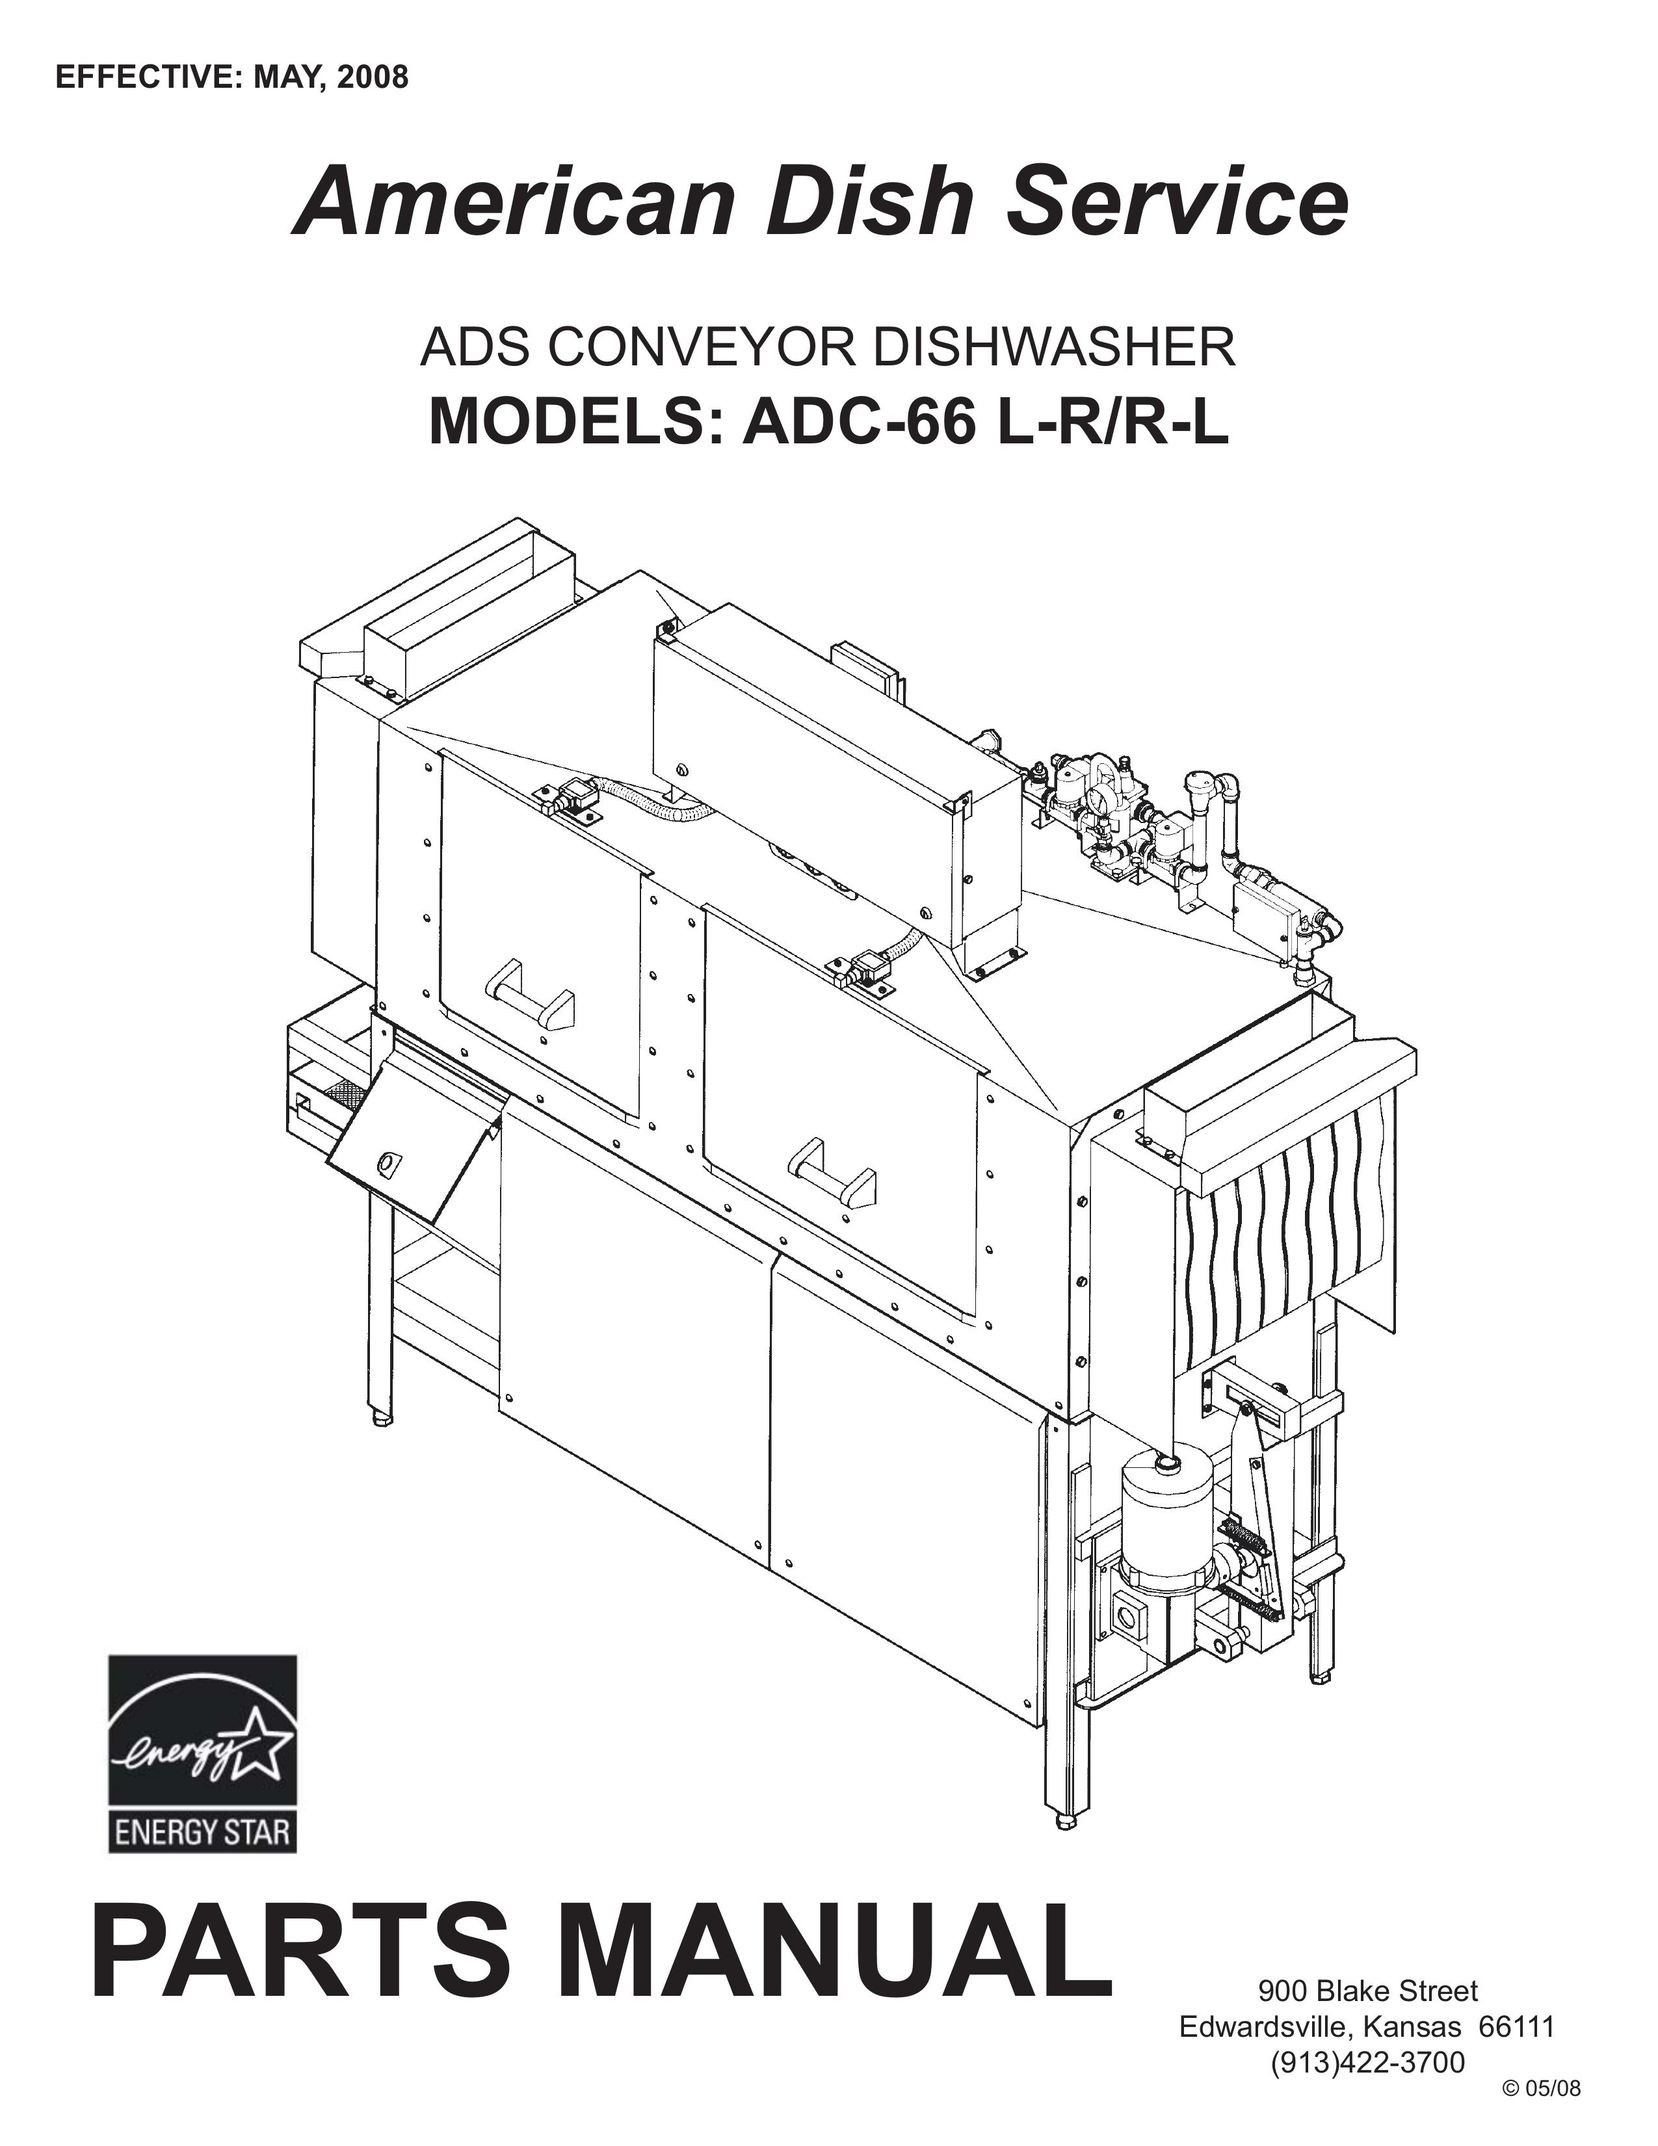 American Dish Service ADC-66 L-R/R-L Dishwasher User Manual